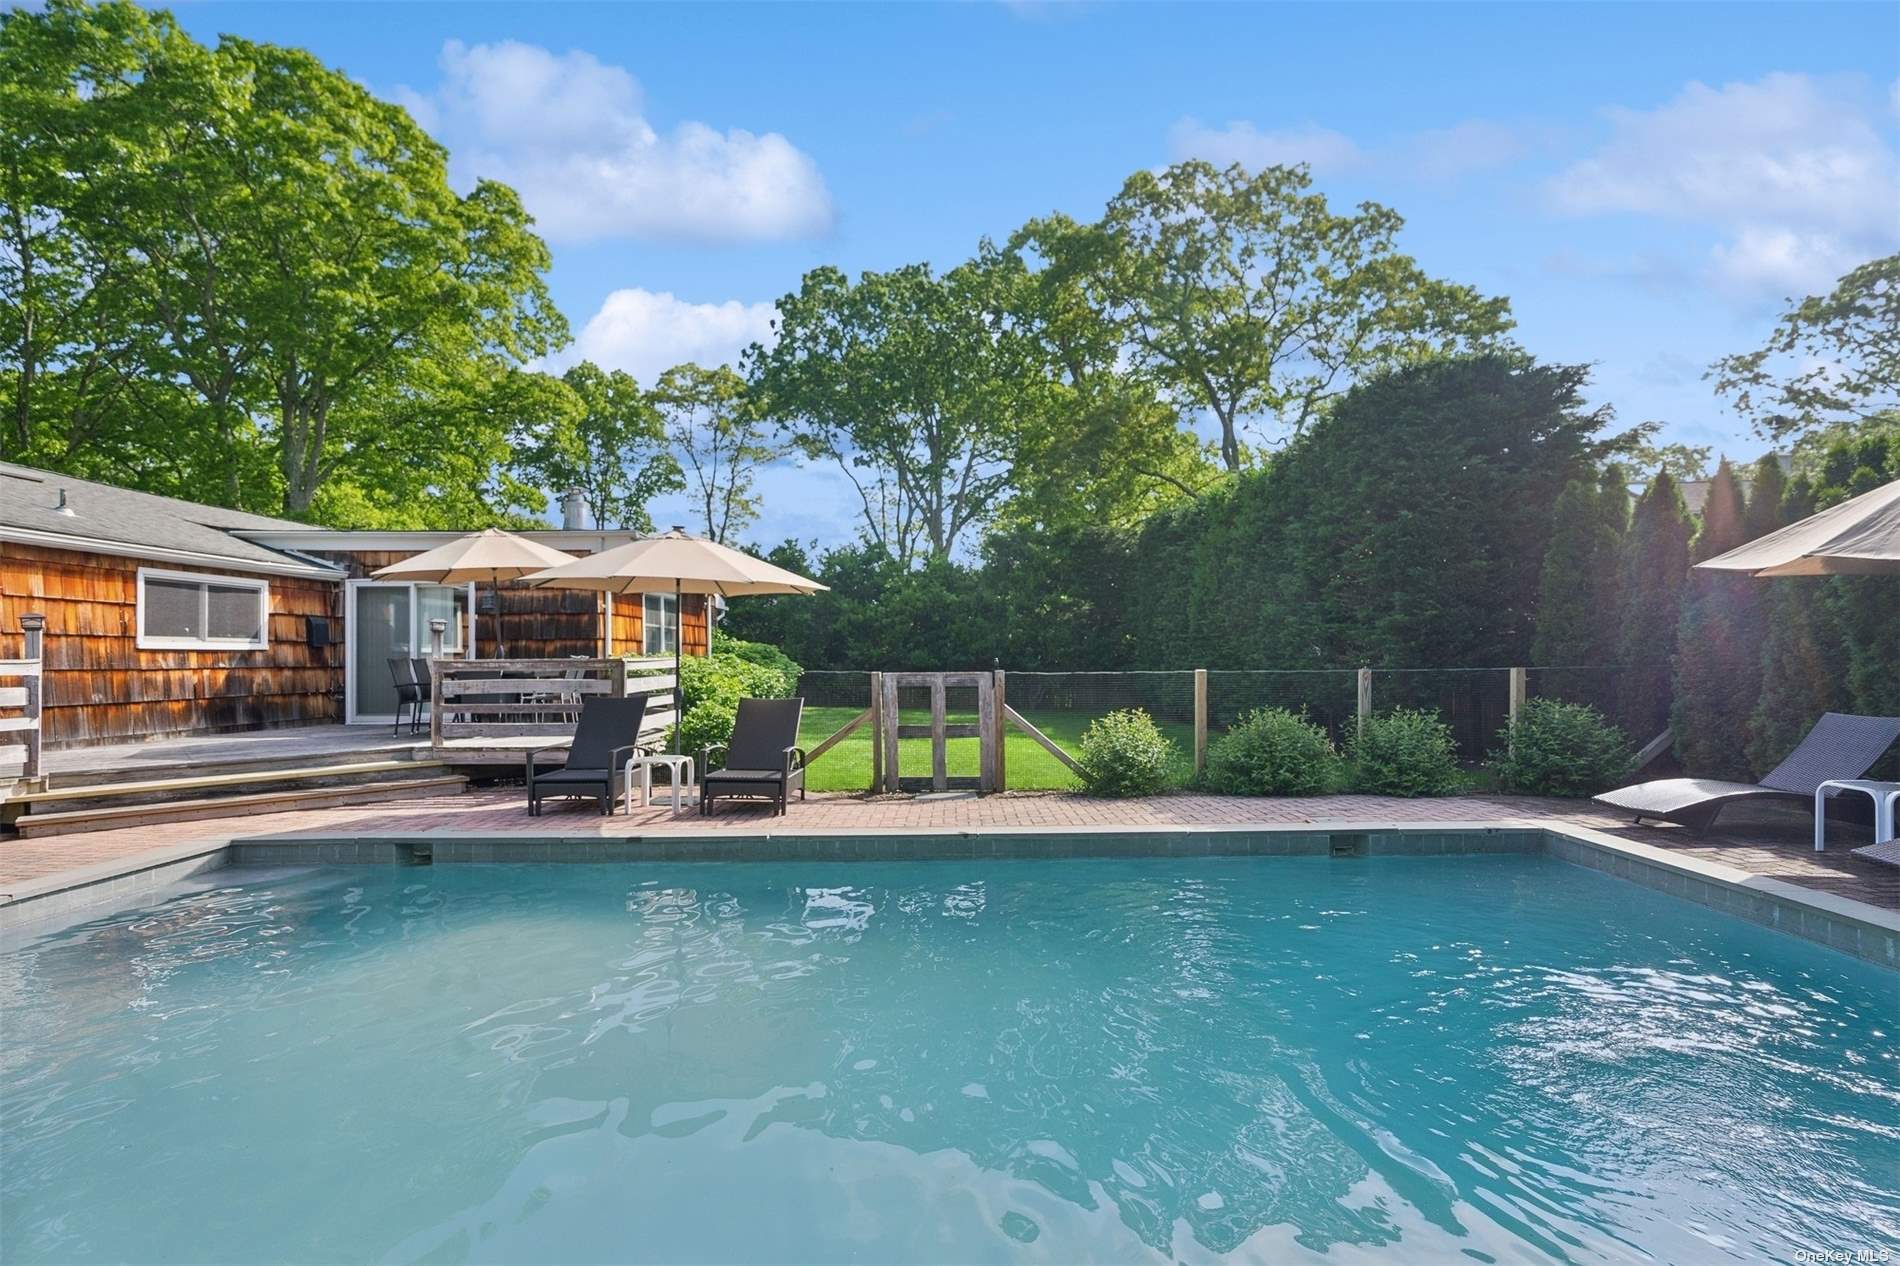 Rental Property at 40 Roman Road, Southampton, Hamptons, NY - Bedrooms: 3 
Bathrooms: 3  - $100,000 MO.